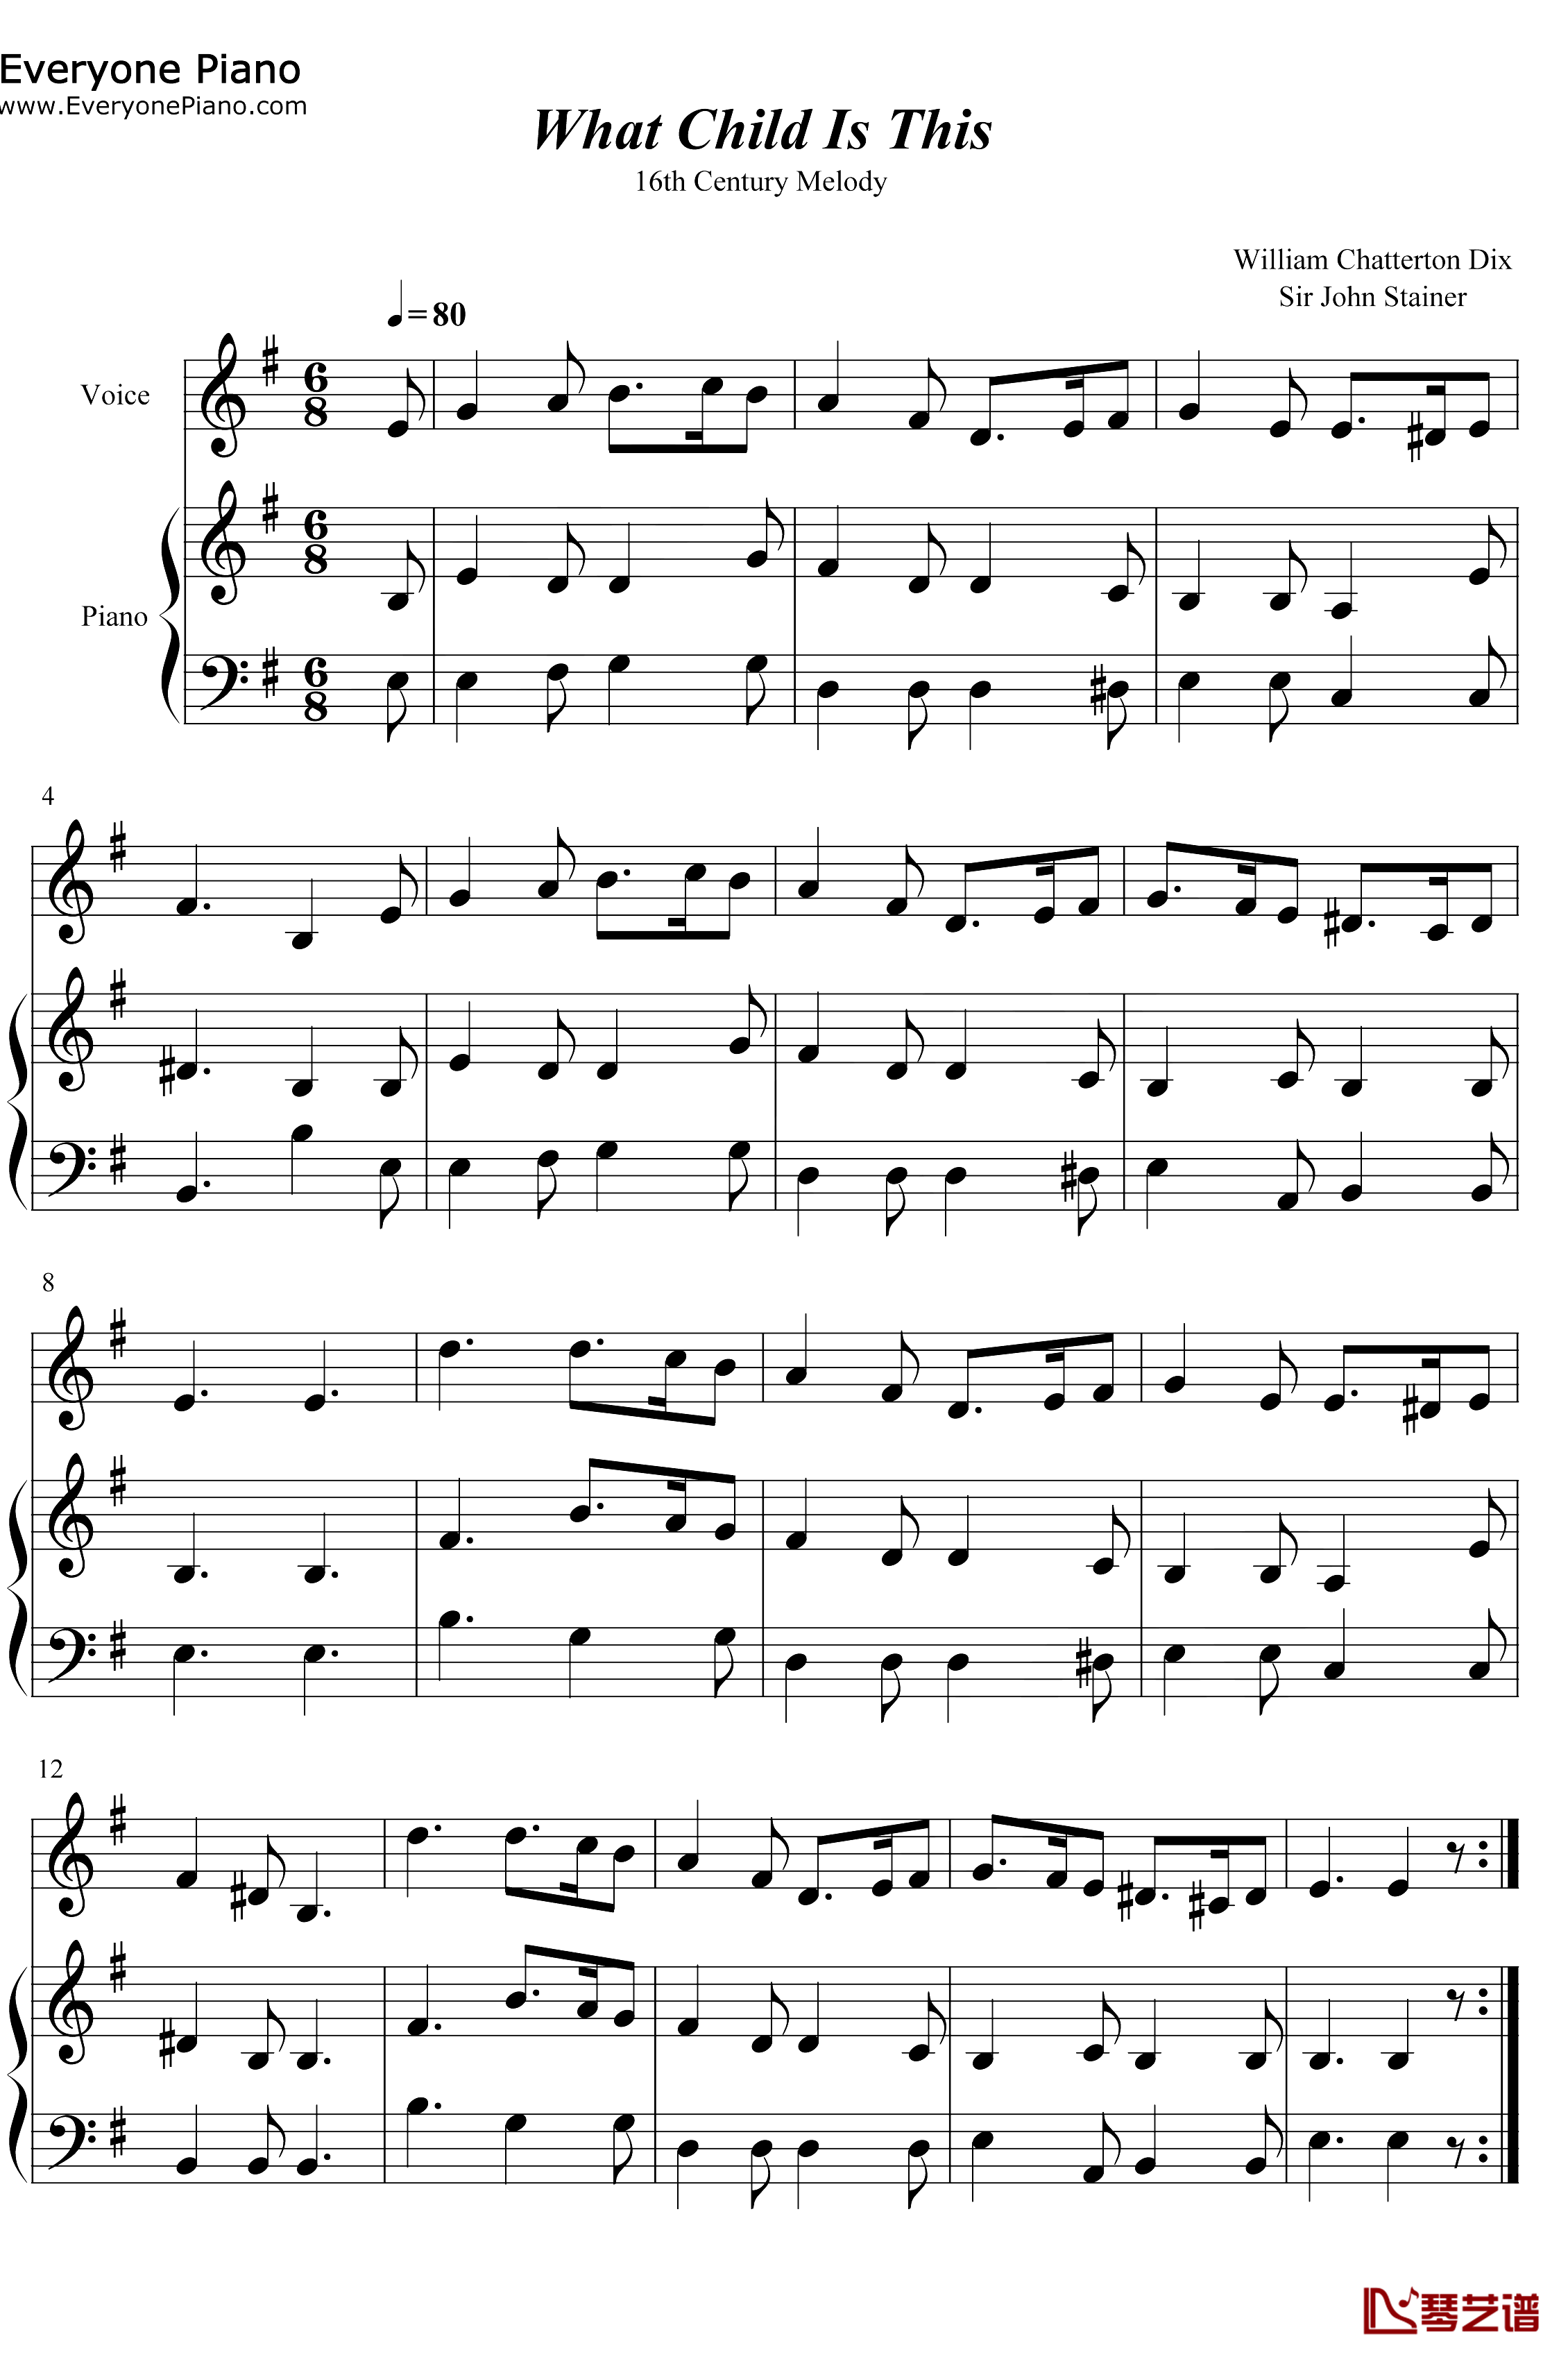 What Child Is This钢琴谱-William Chatterton Dix-圣诞颂歌1